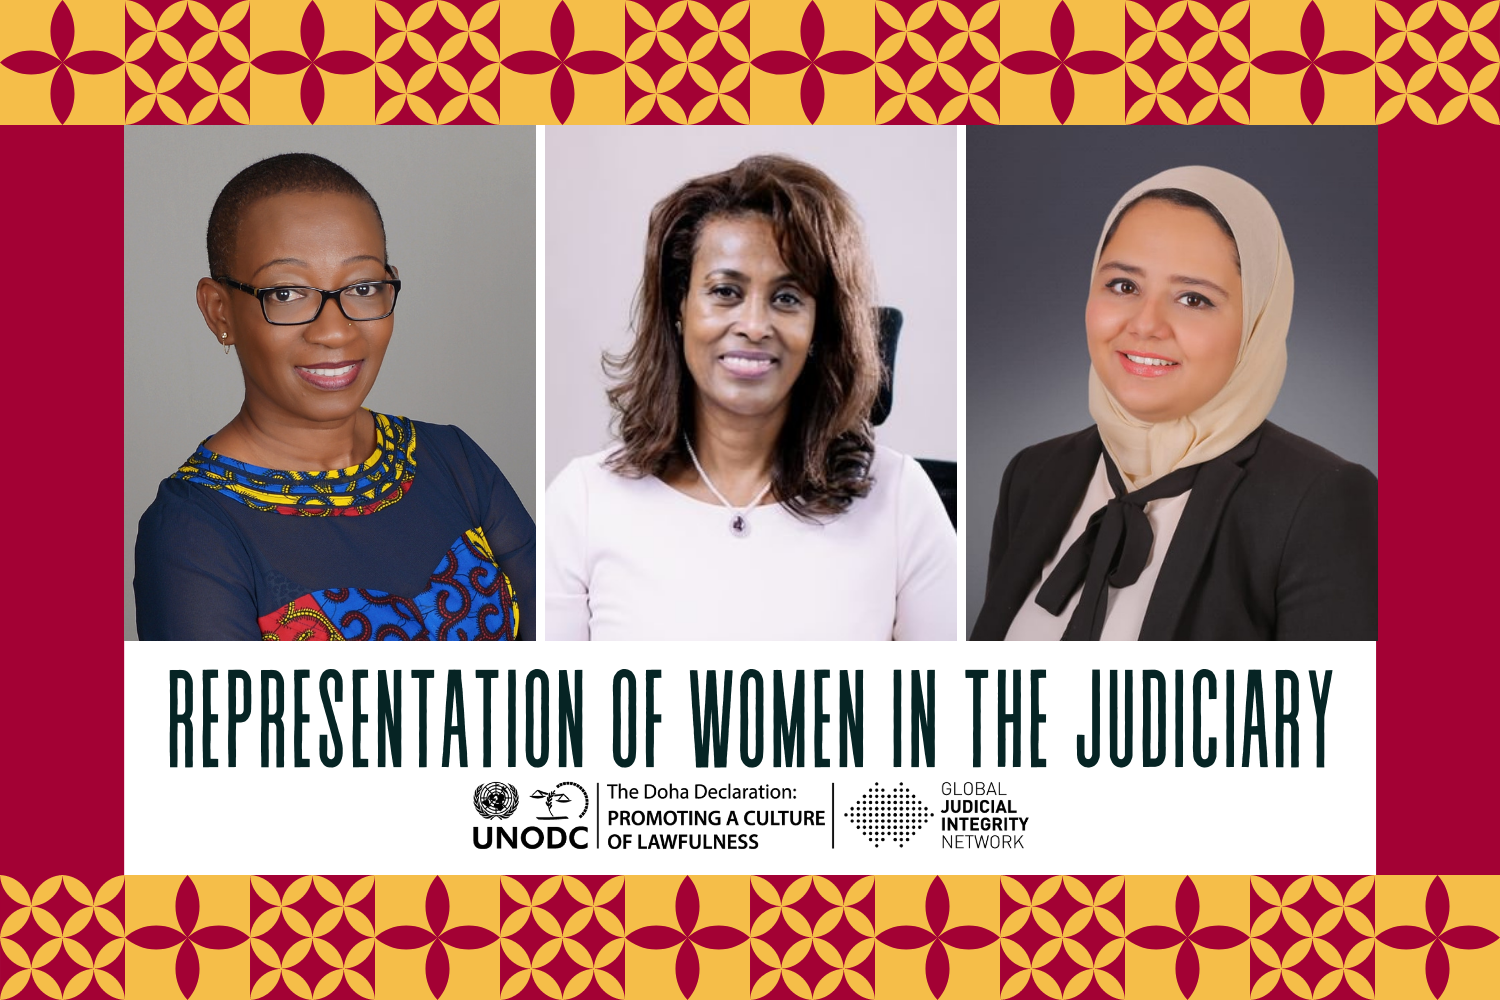 Progress towards Parity: The Representation of Women in the Judiciary